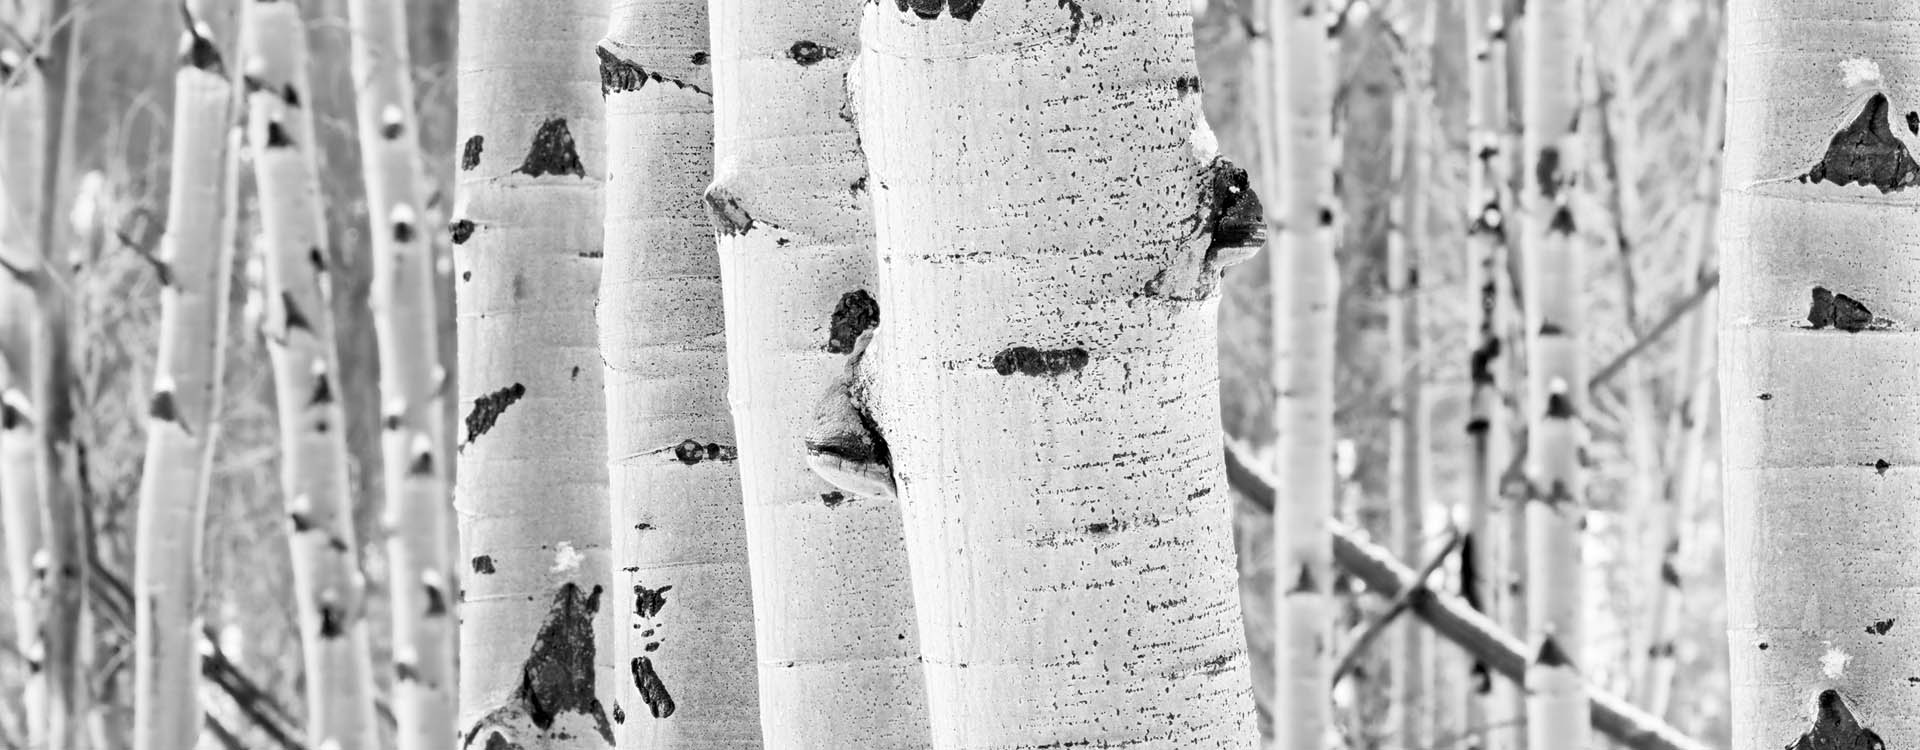 Aspen Trees Texture